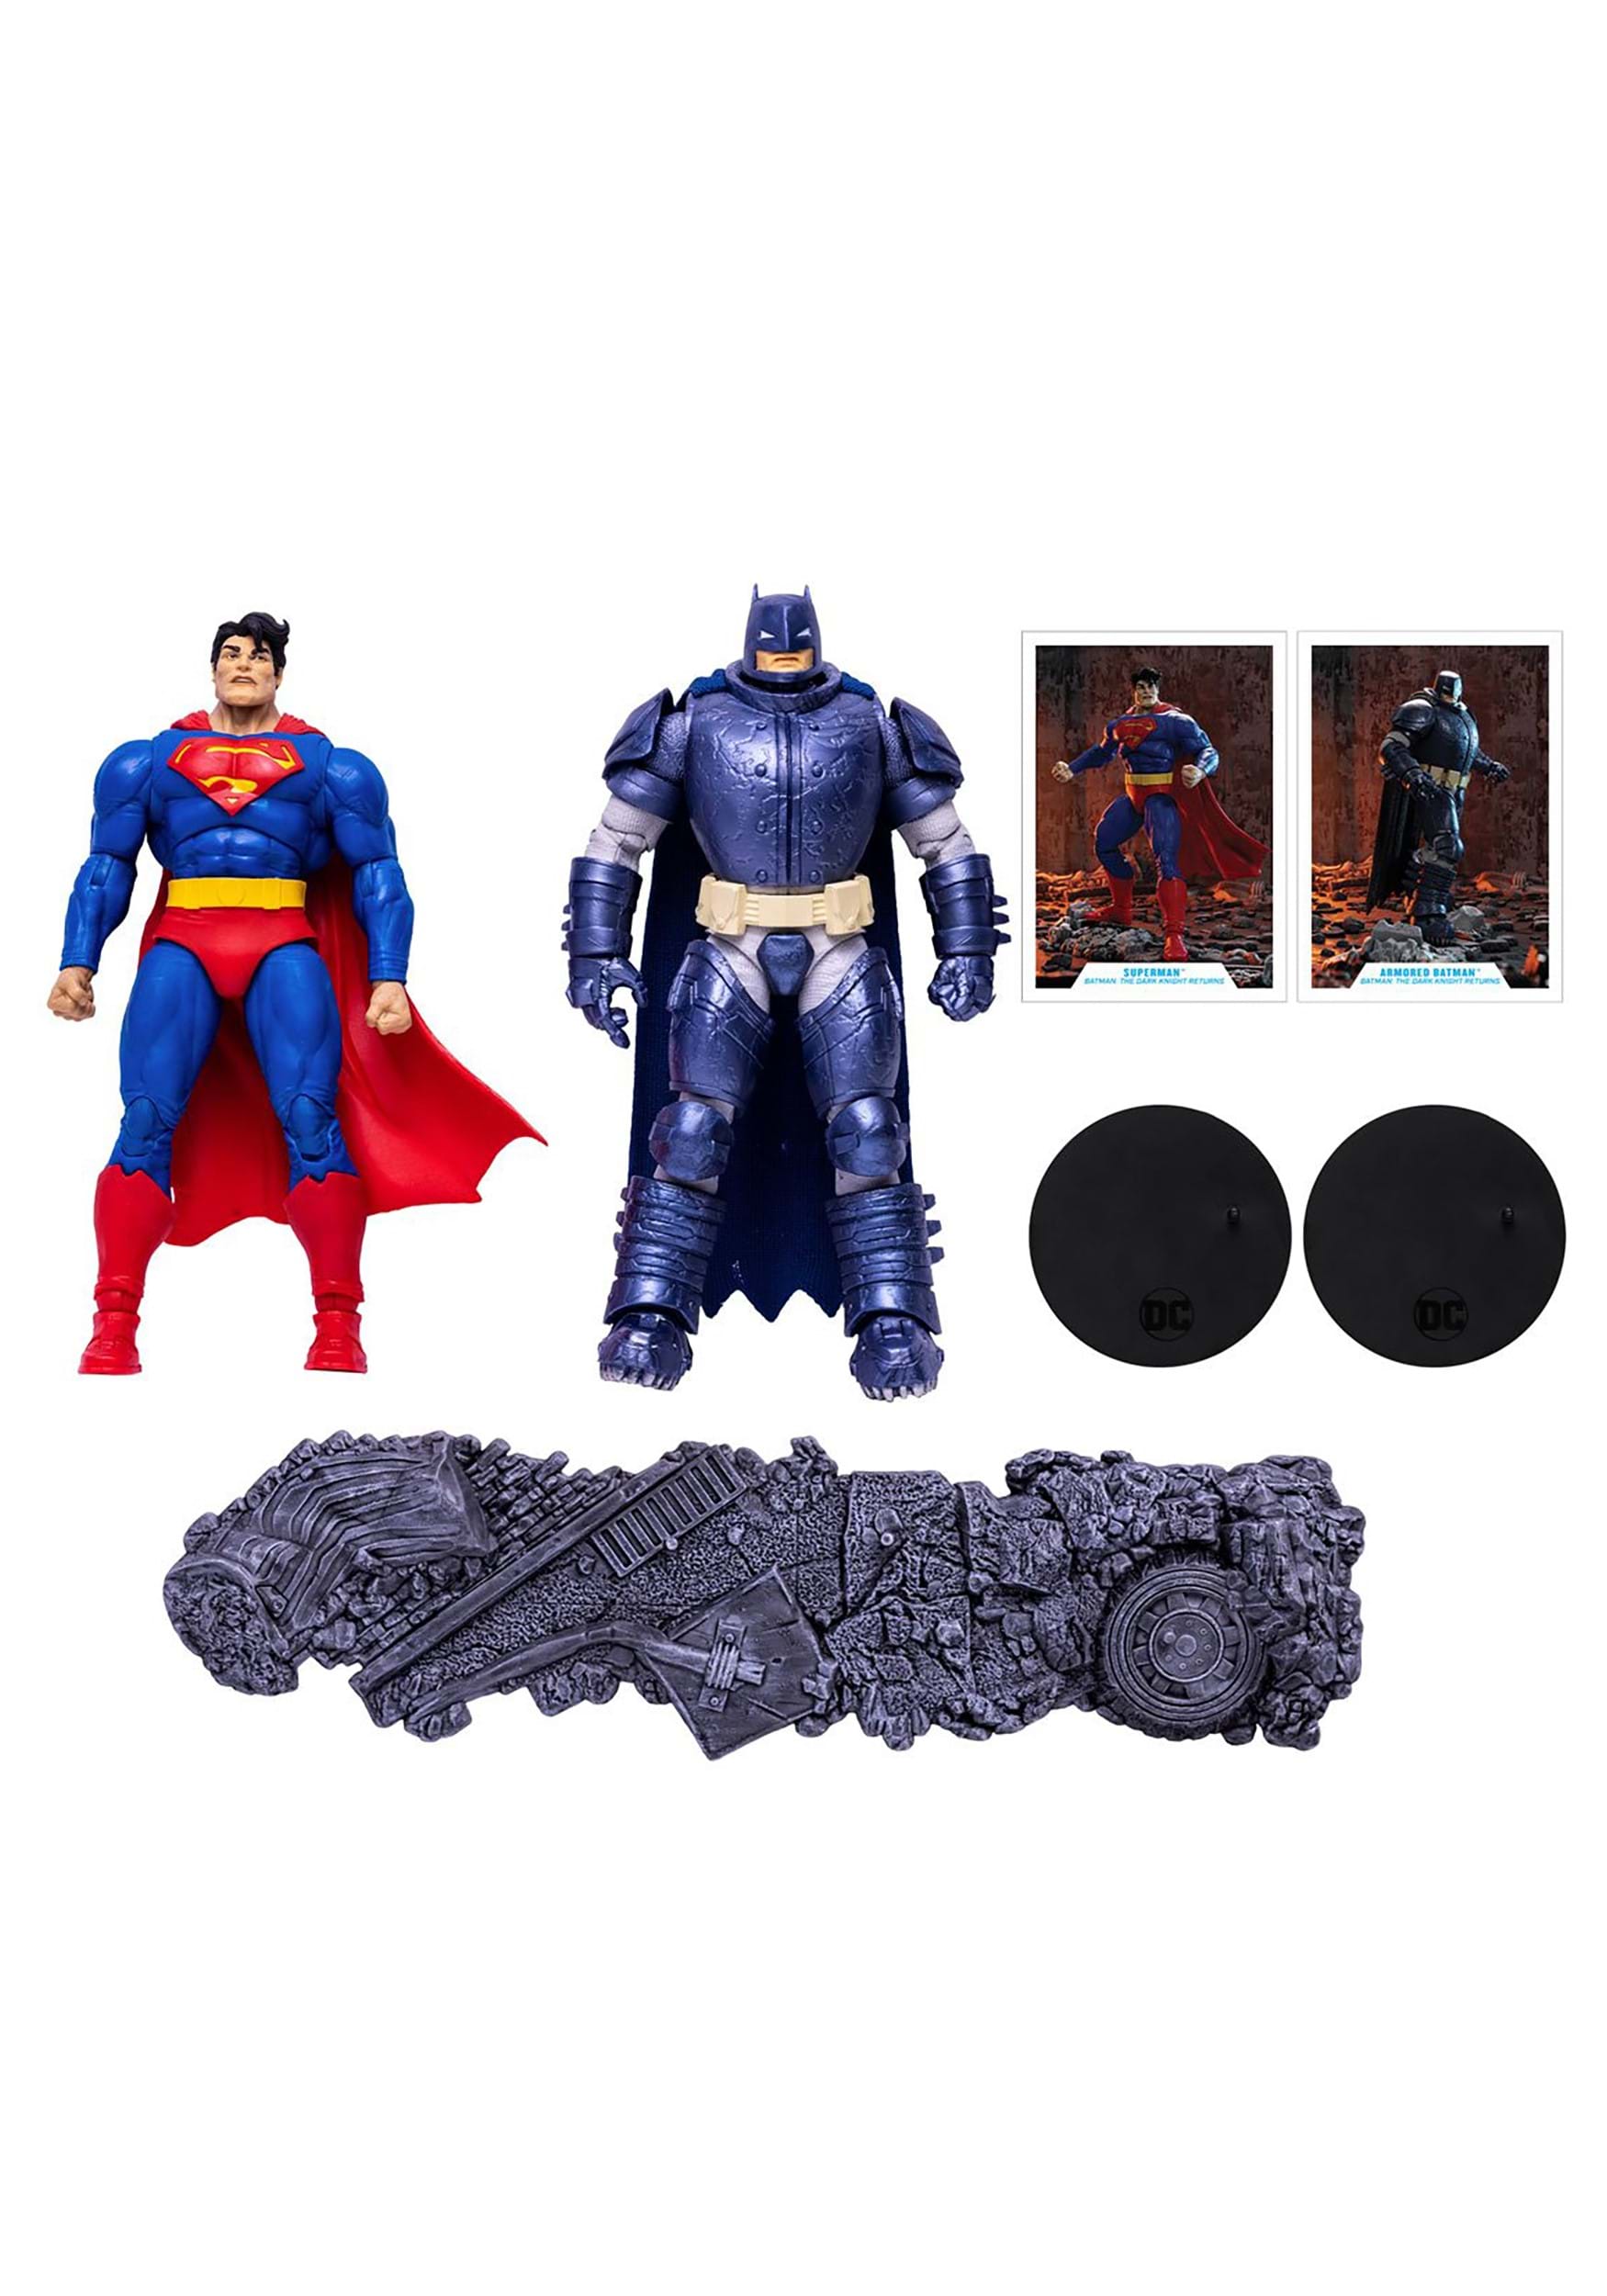 DC The Dark Knight Returns Superman Vs. Batman 7 Scale Action Figure